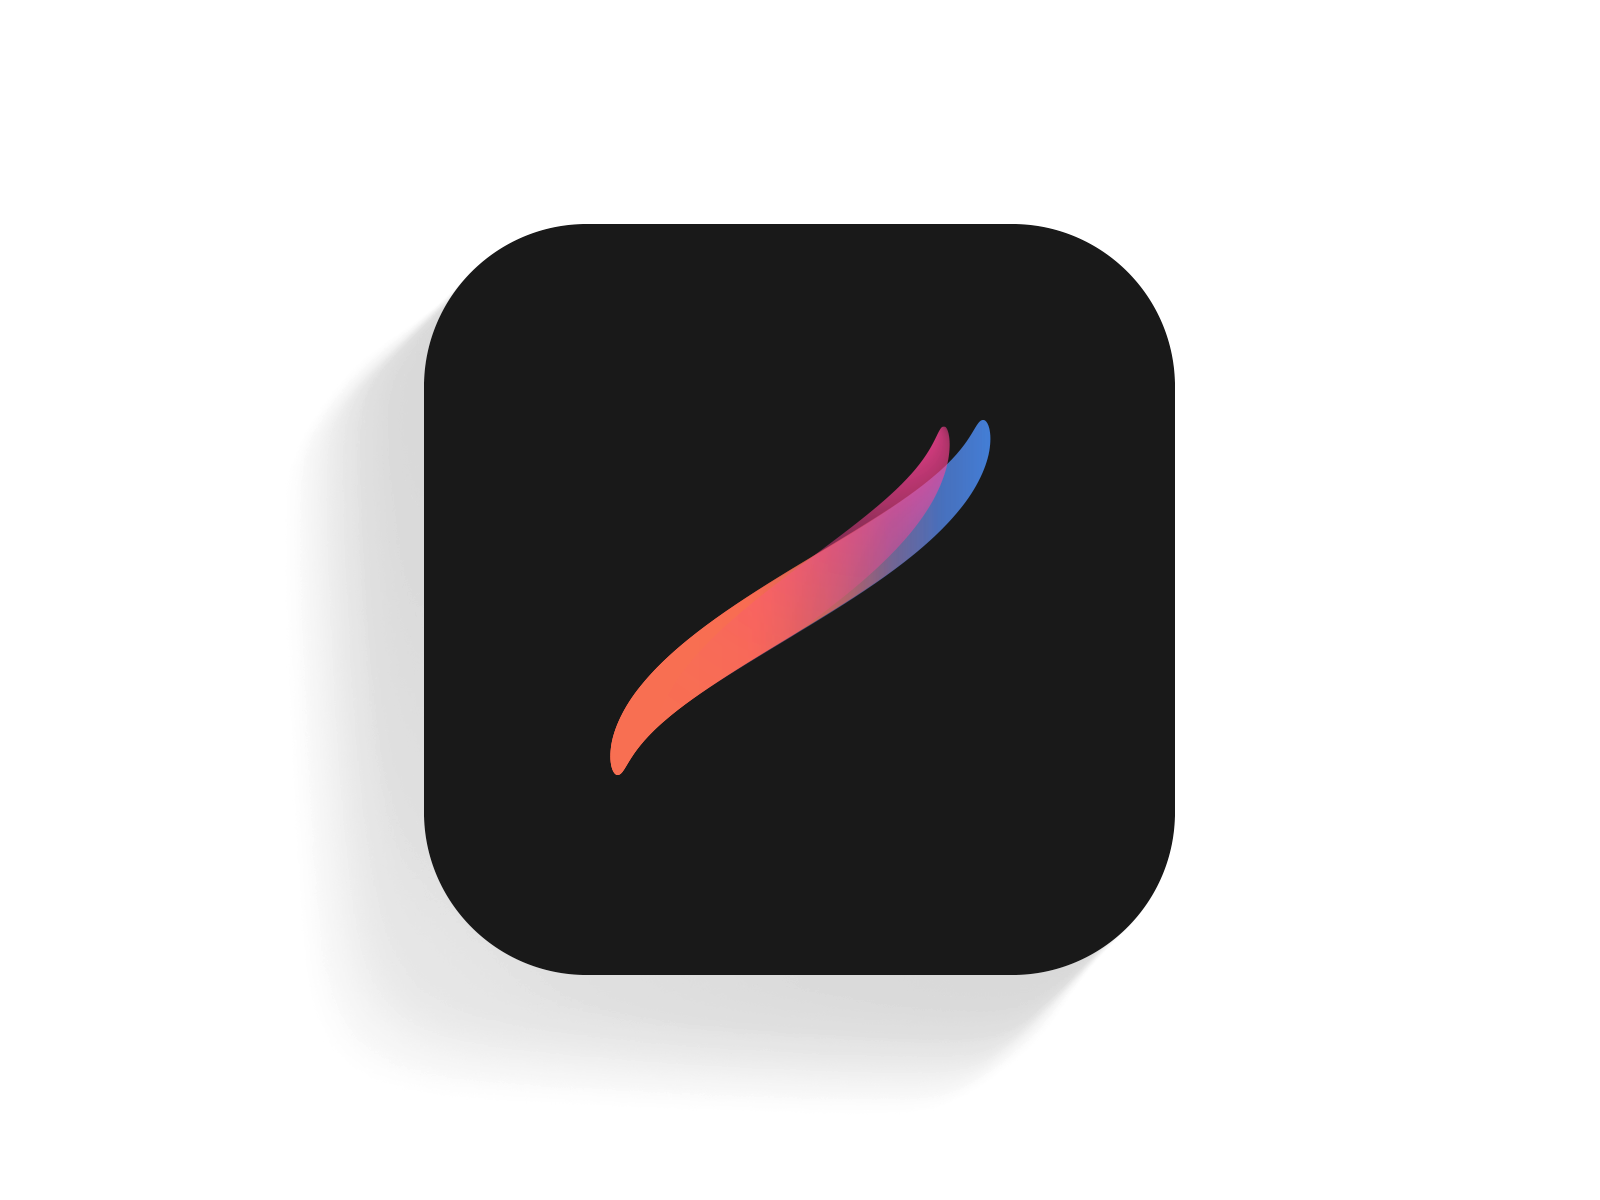 Procreate App Icon Redesign by Rendra Diardjo on Dribbble